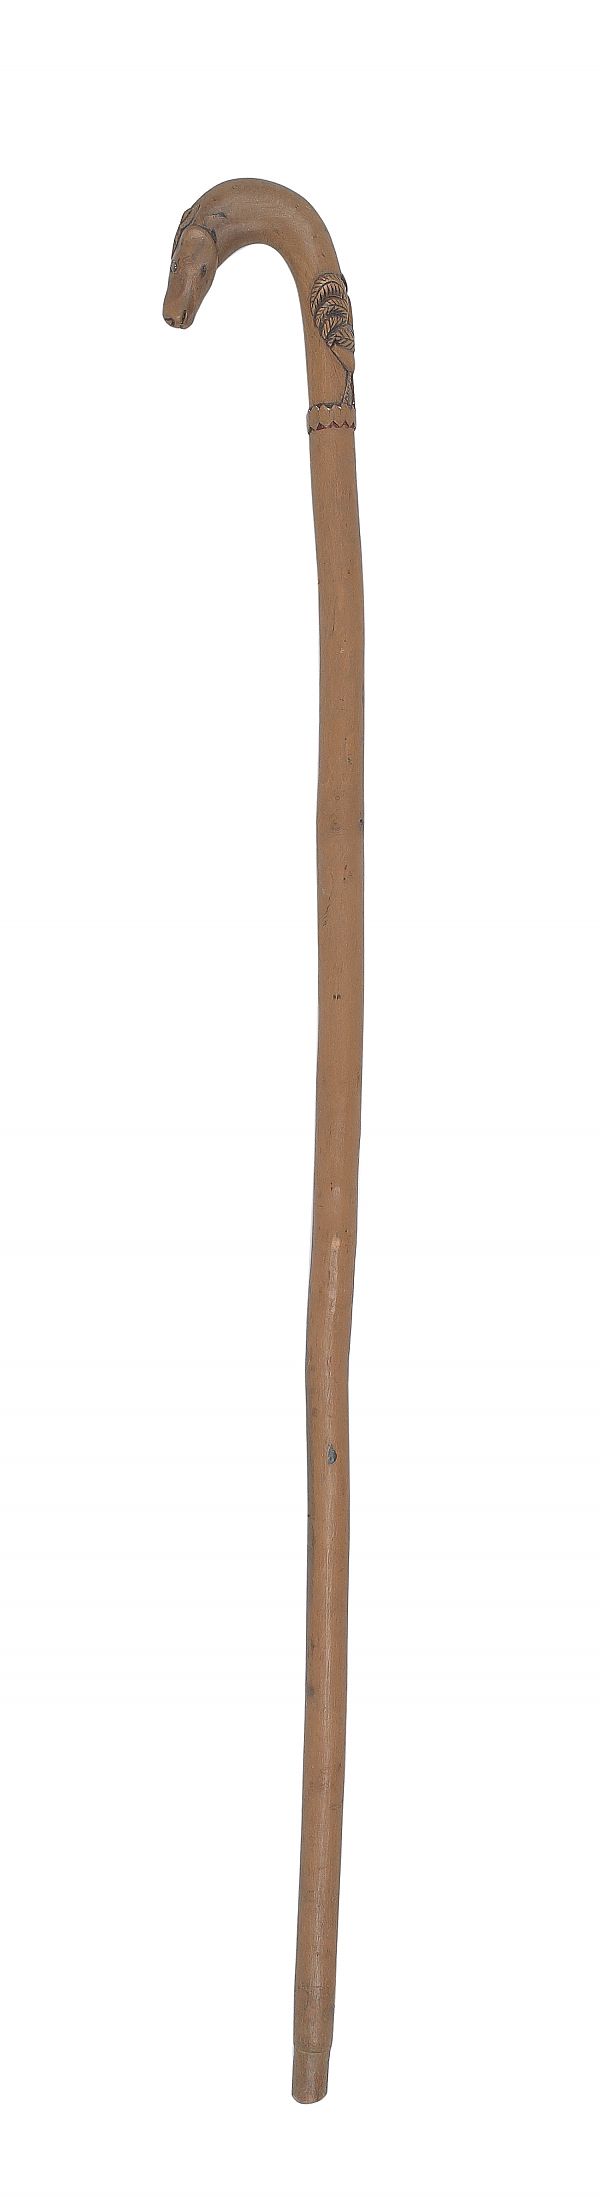 Pennsylvania carved walking stick